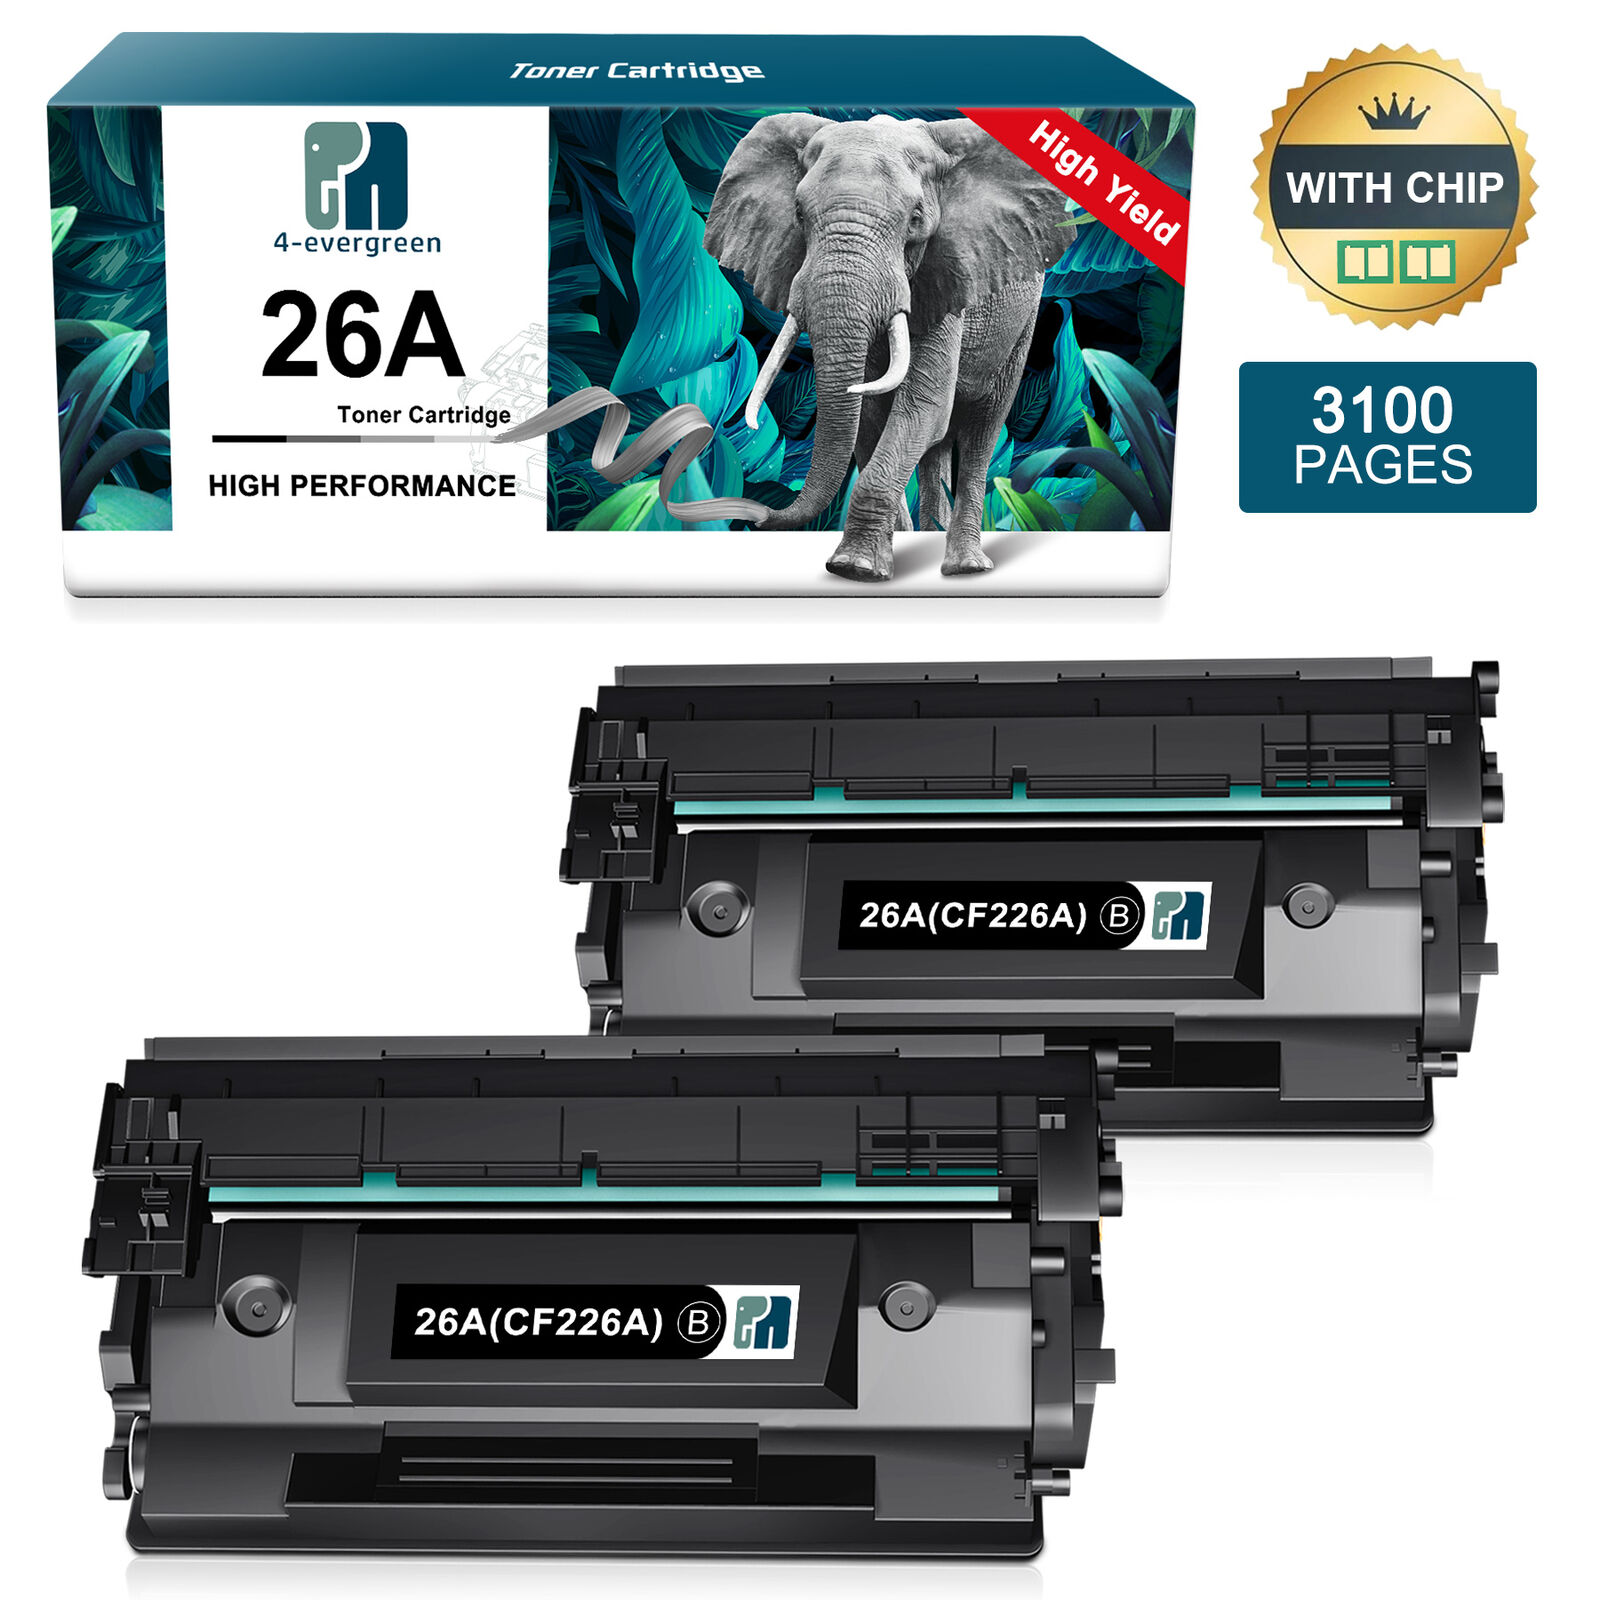 2x CF226A Ink Toner Compatible With HP 26A LaserJet Pro M402dn M402n M426fdw MFP